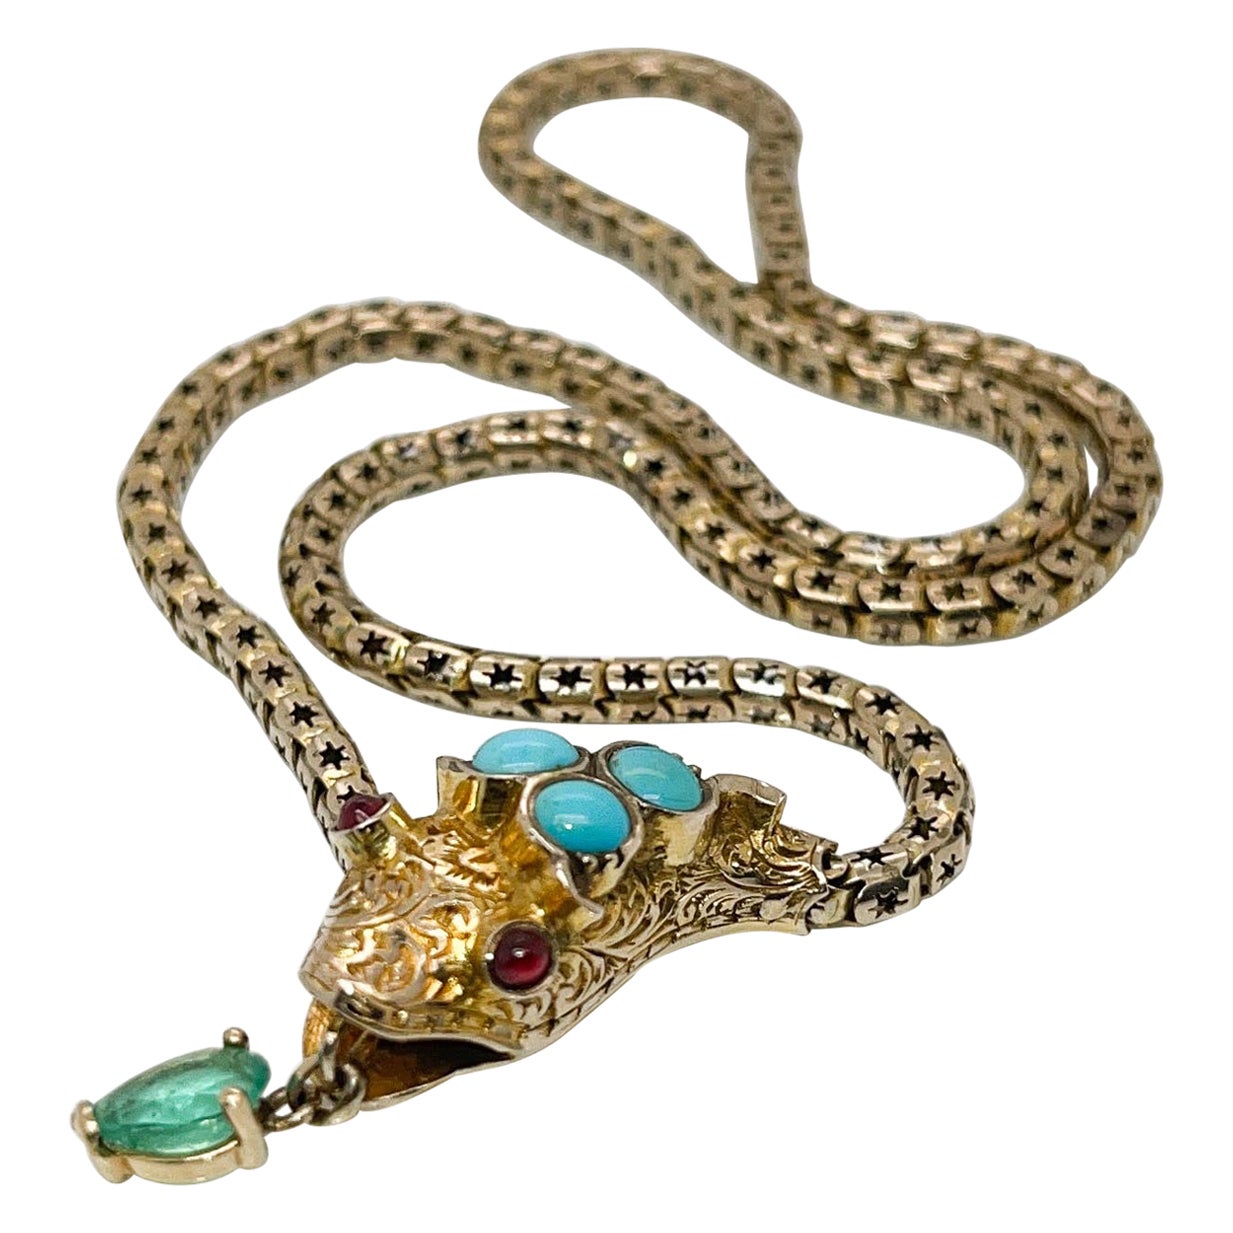 Antique Victorian Gold & Gemstone Figural Snake Choker Necklace